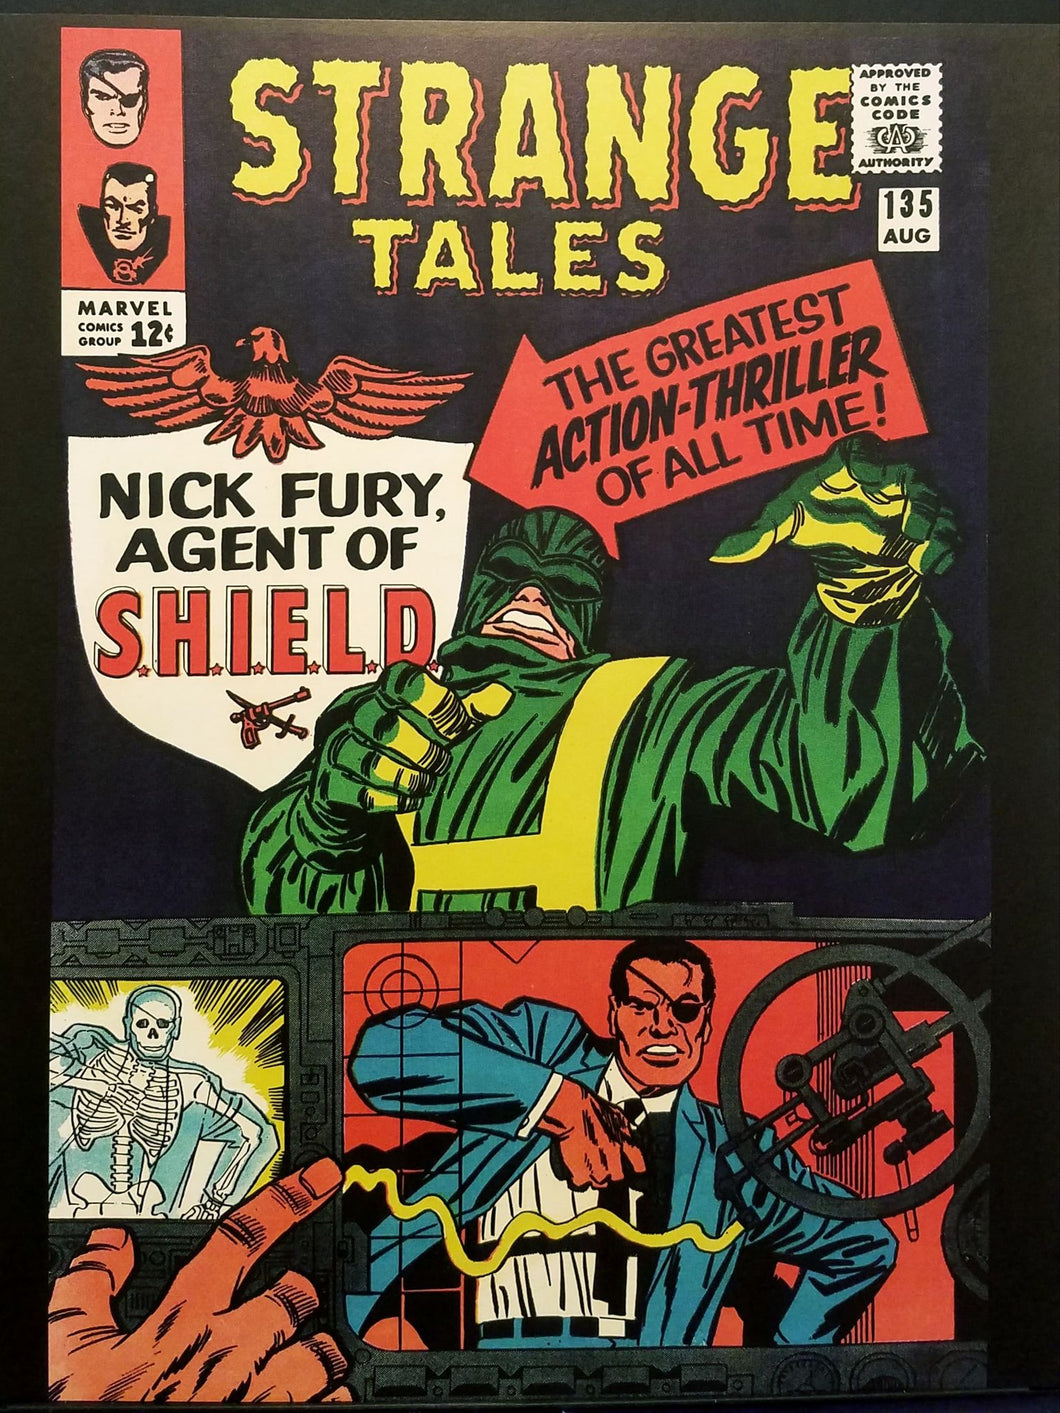 Strange Tales #135 by Jack Kirby 11x14 FRAMED Art Print, Vintage 1965 Marvel Comics